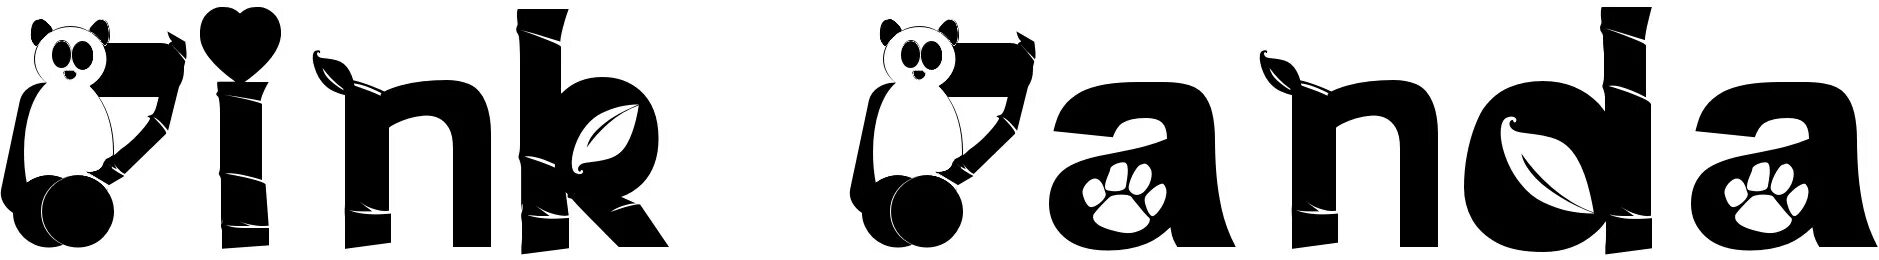 Панда шрифт. Панда из шрифта __. Панда красивым шрифтом. Cute Panda шрифт. Pat c